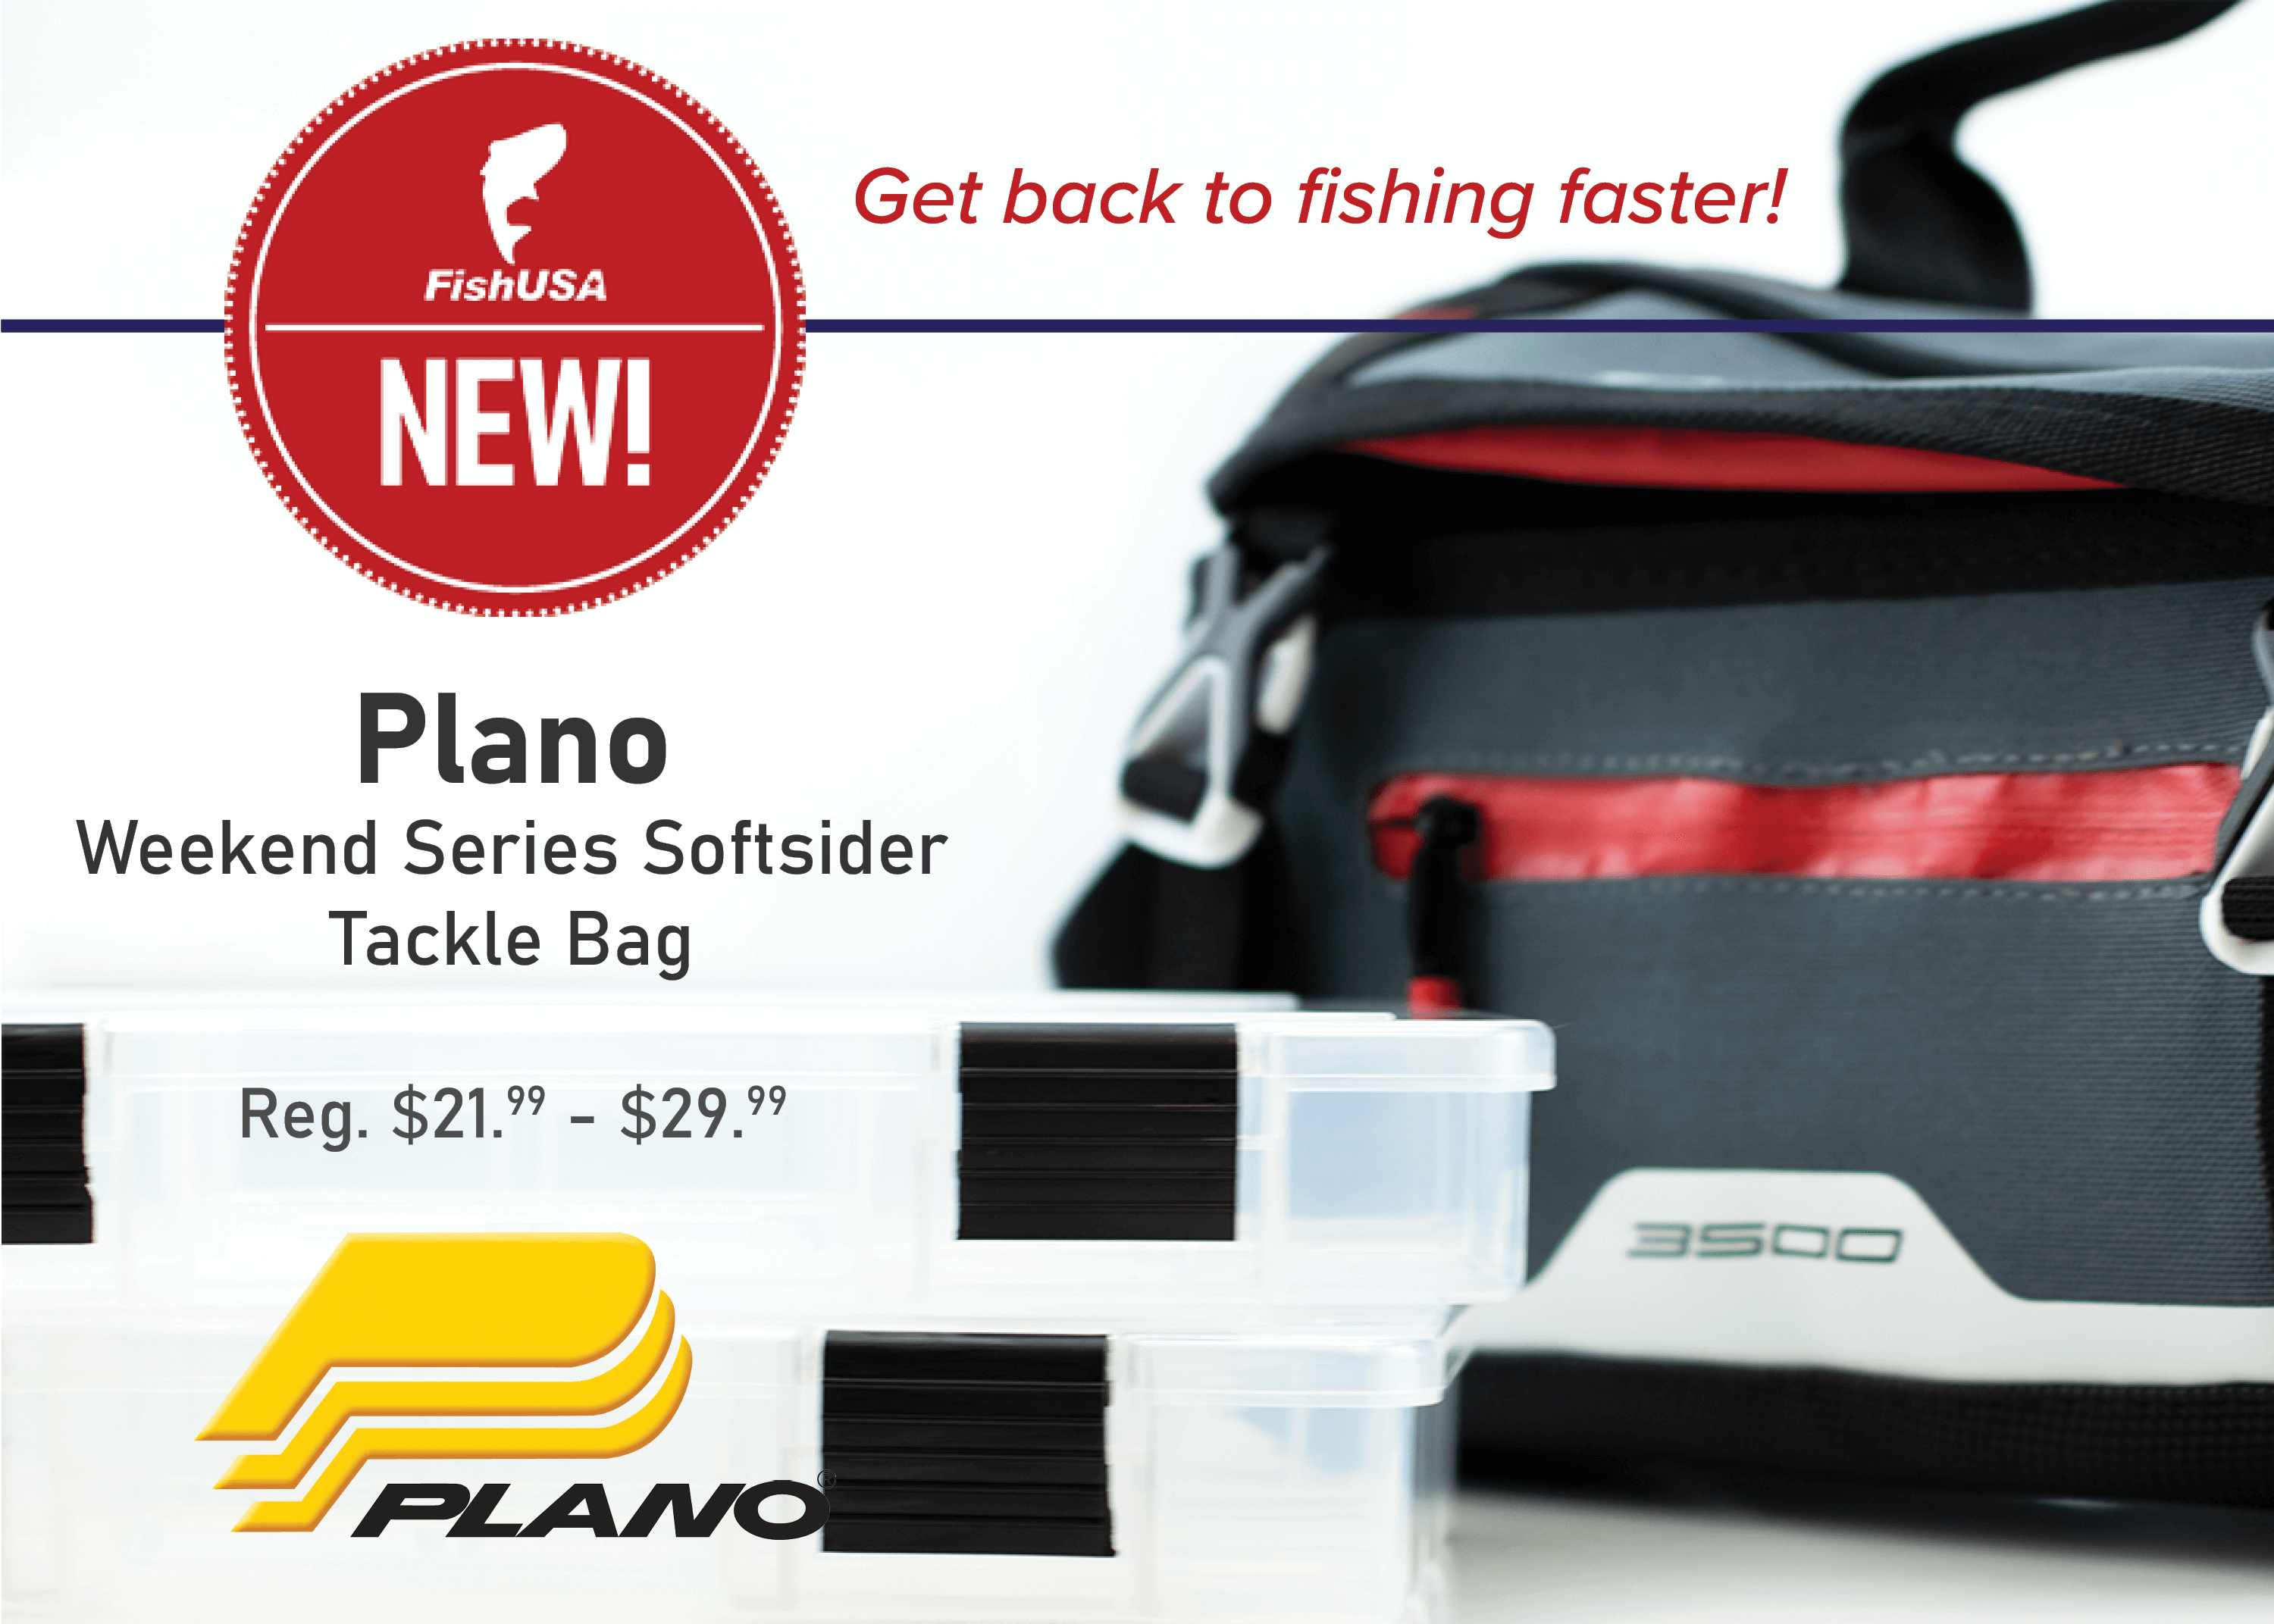 Plano Weekend Series Softsider Tackle Bag 